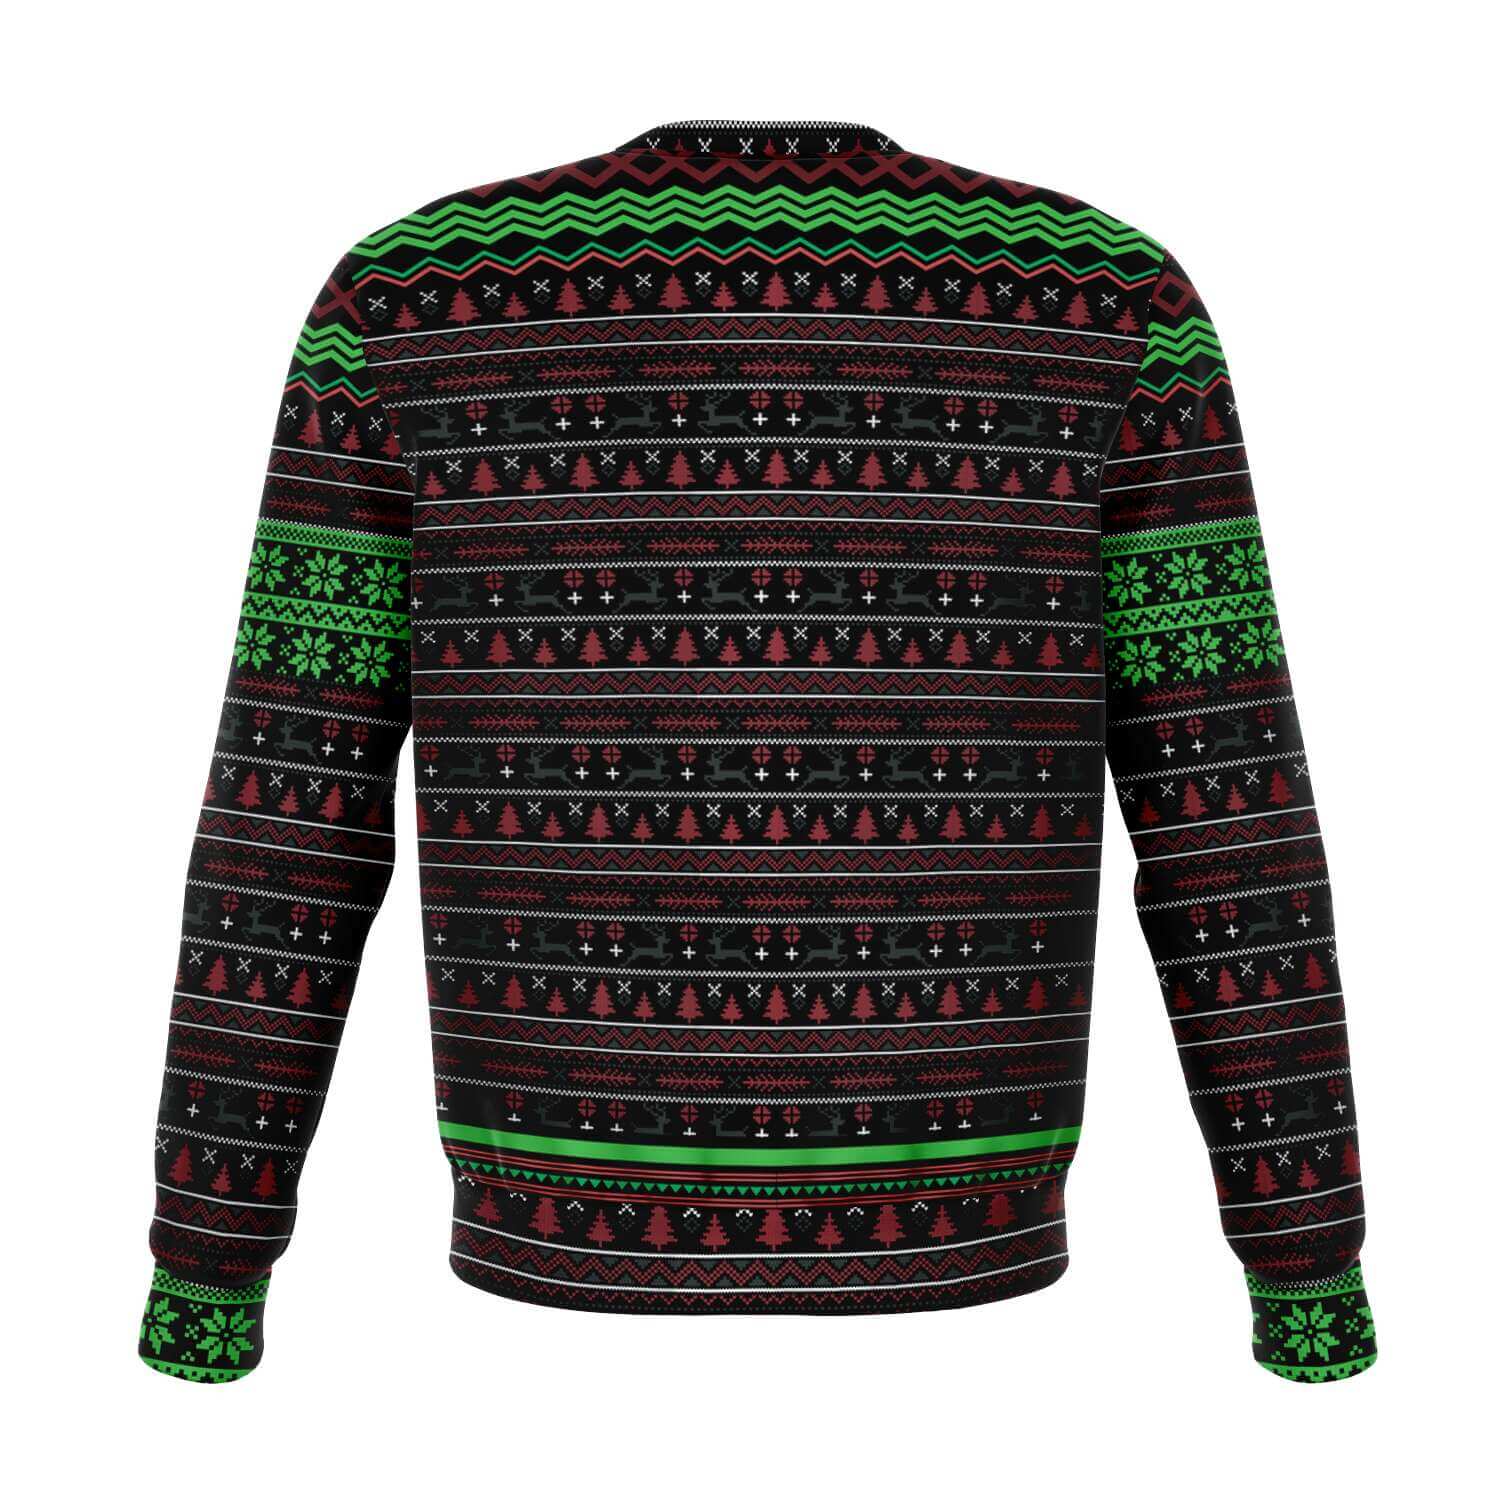 All-I-want-for-Christmas-is-Anime-Athletic-Fashion-sweatshirt